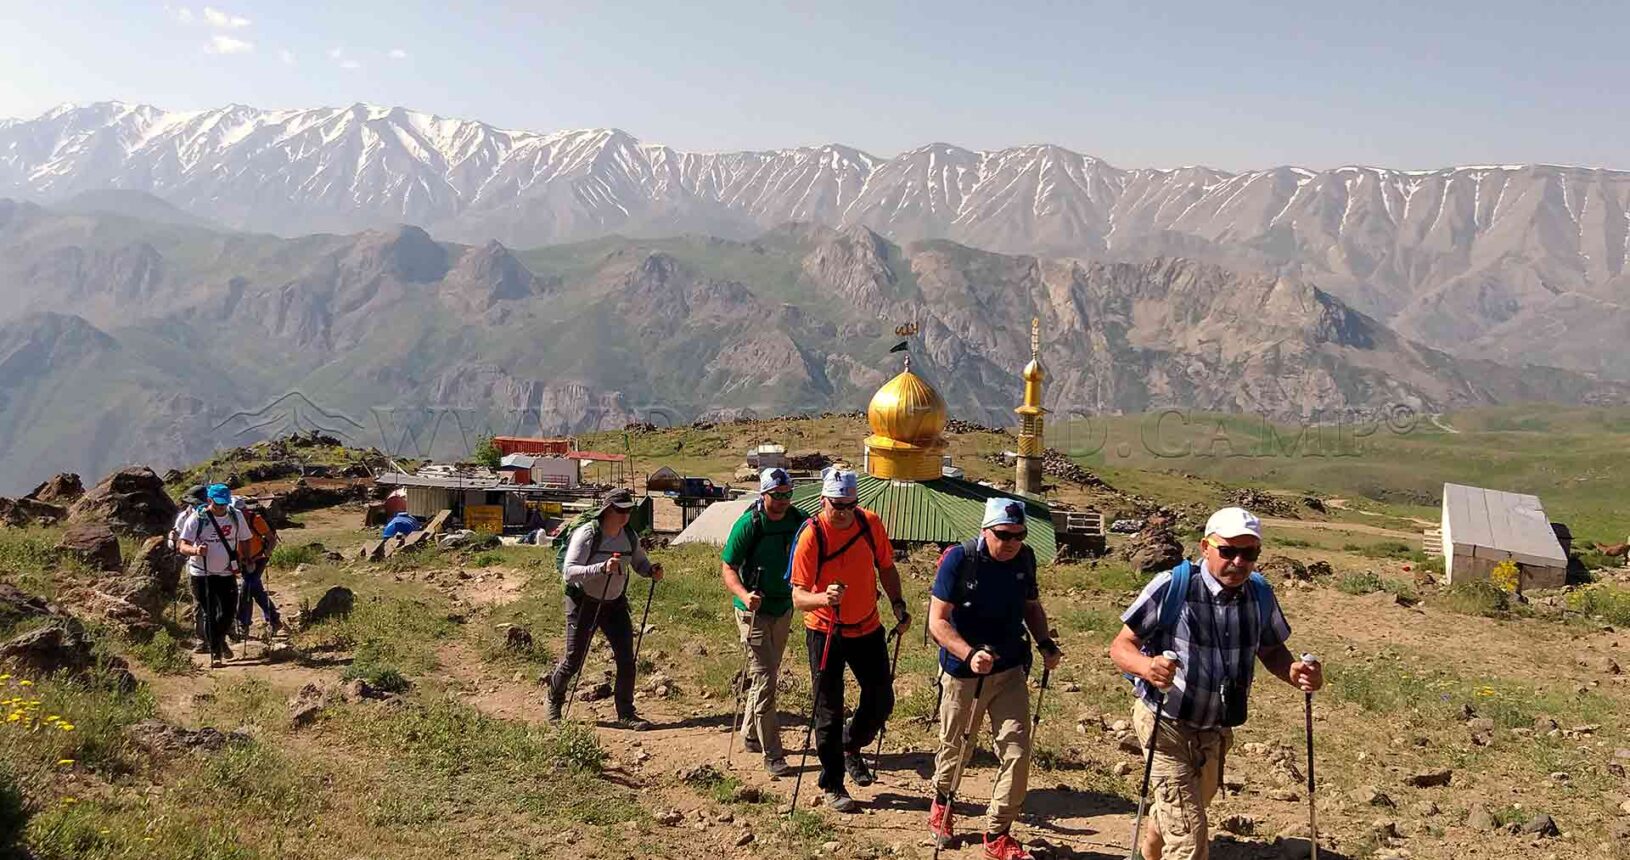 The tour participants just after beginning the trek from Camp 2 (Goosfand sara) of Damavand.